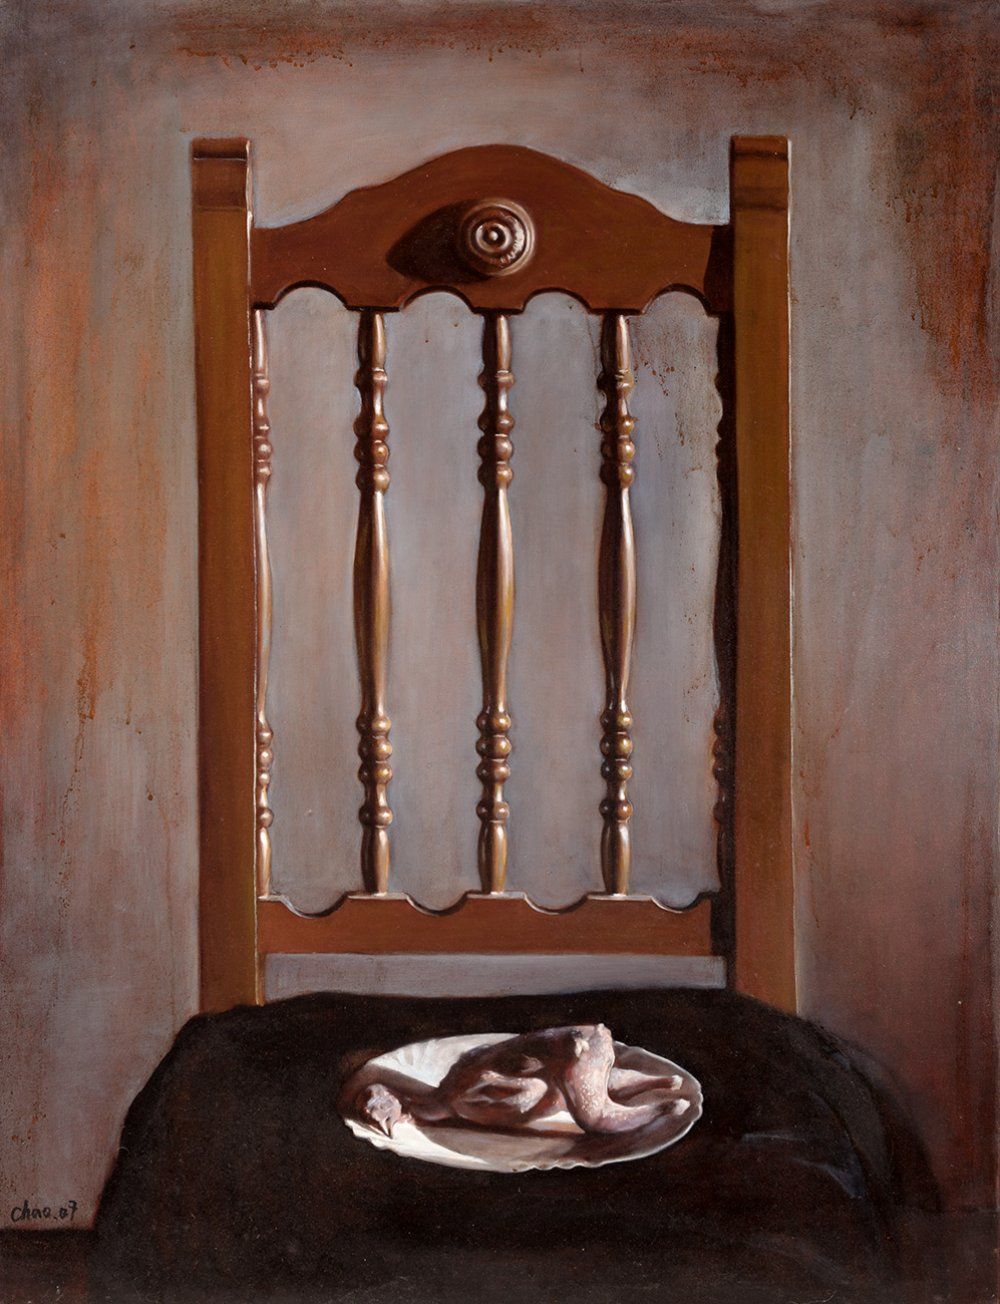 Null 曹诚渊（台湾，1977年）
"椅子", 2007.
布面油画。
左下角有签名和日期。
测量：116 x 73厘米。
黄超成是一位具象艺术家，他的技术中&hellip;